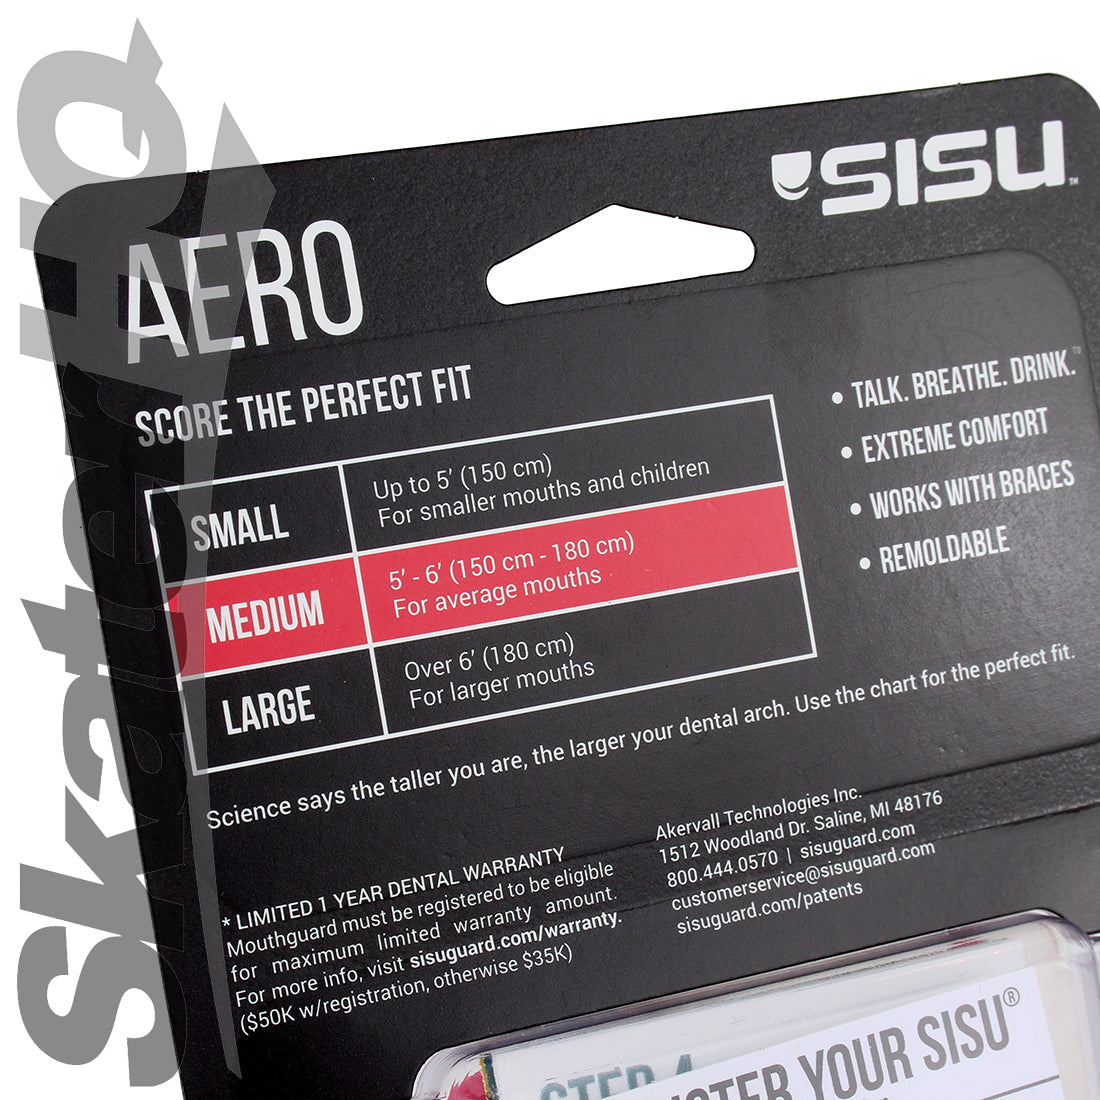 SISU AERO Mouthguard 1.6 Medium - Charcoal Black Protective Mouthguards